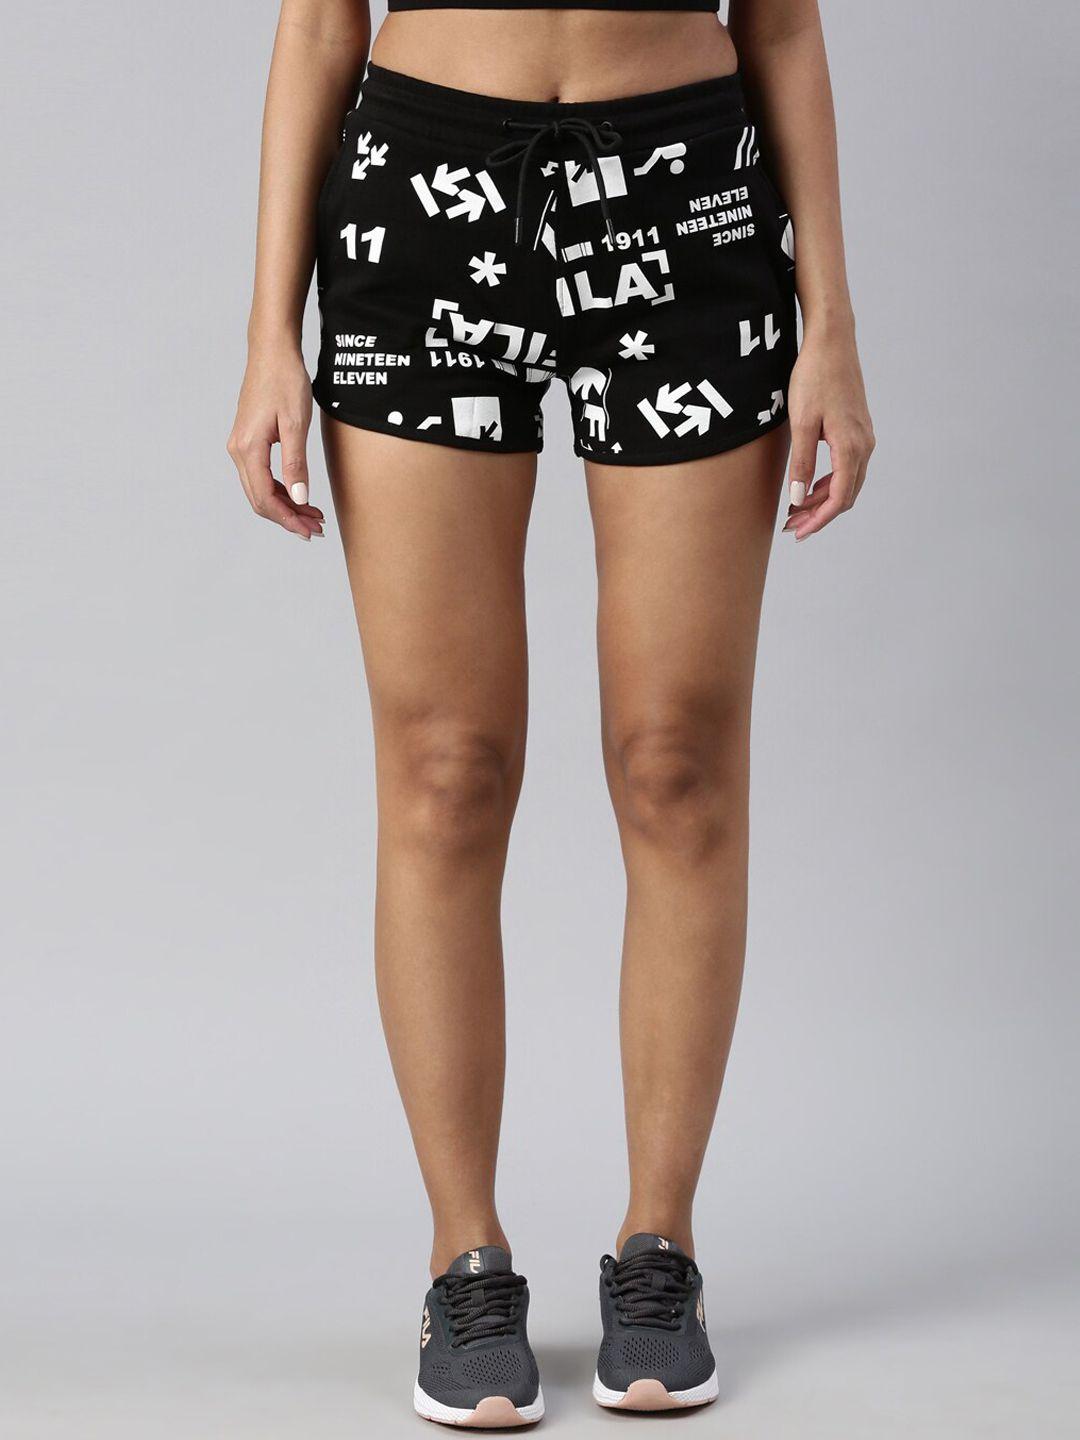 fila-women-typography-printed-training-or-gym-cotton-sports-shorts